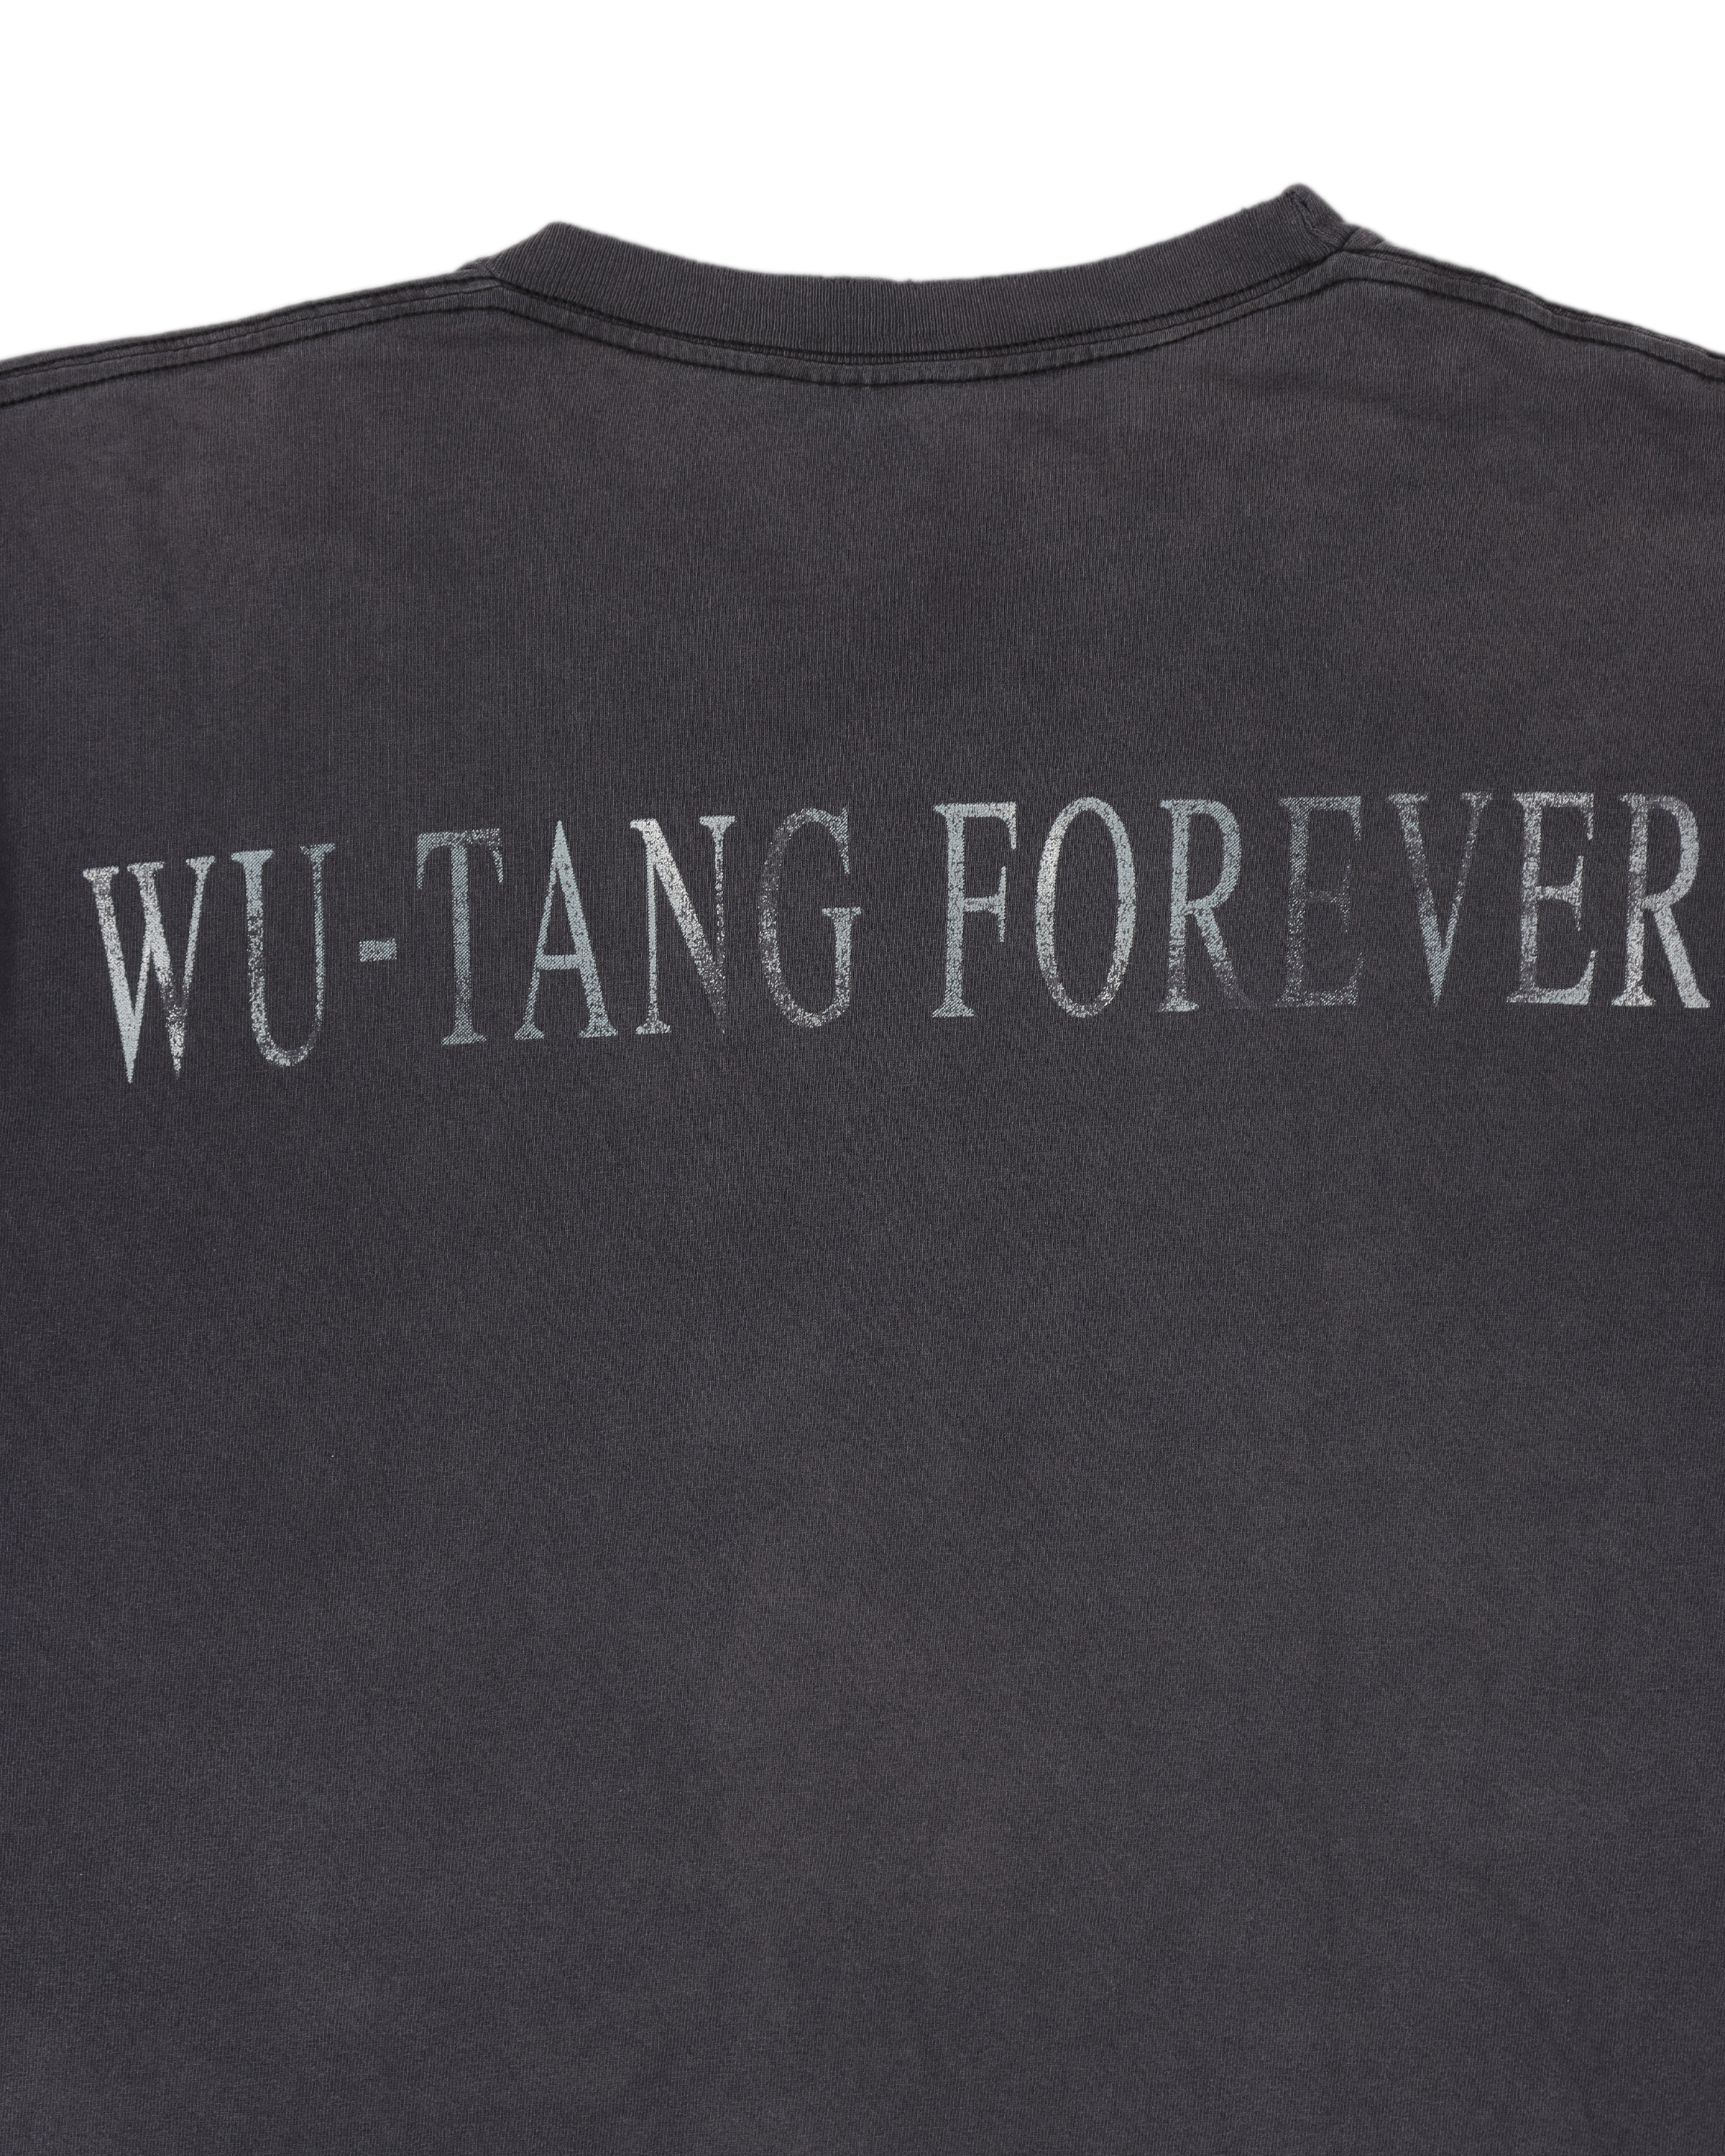 Wu-Tang Clan 'Forever" Logo Promo Faded T-Shirt